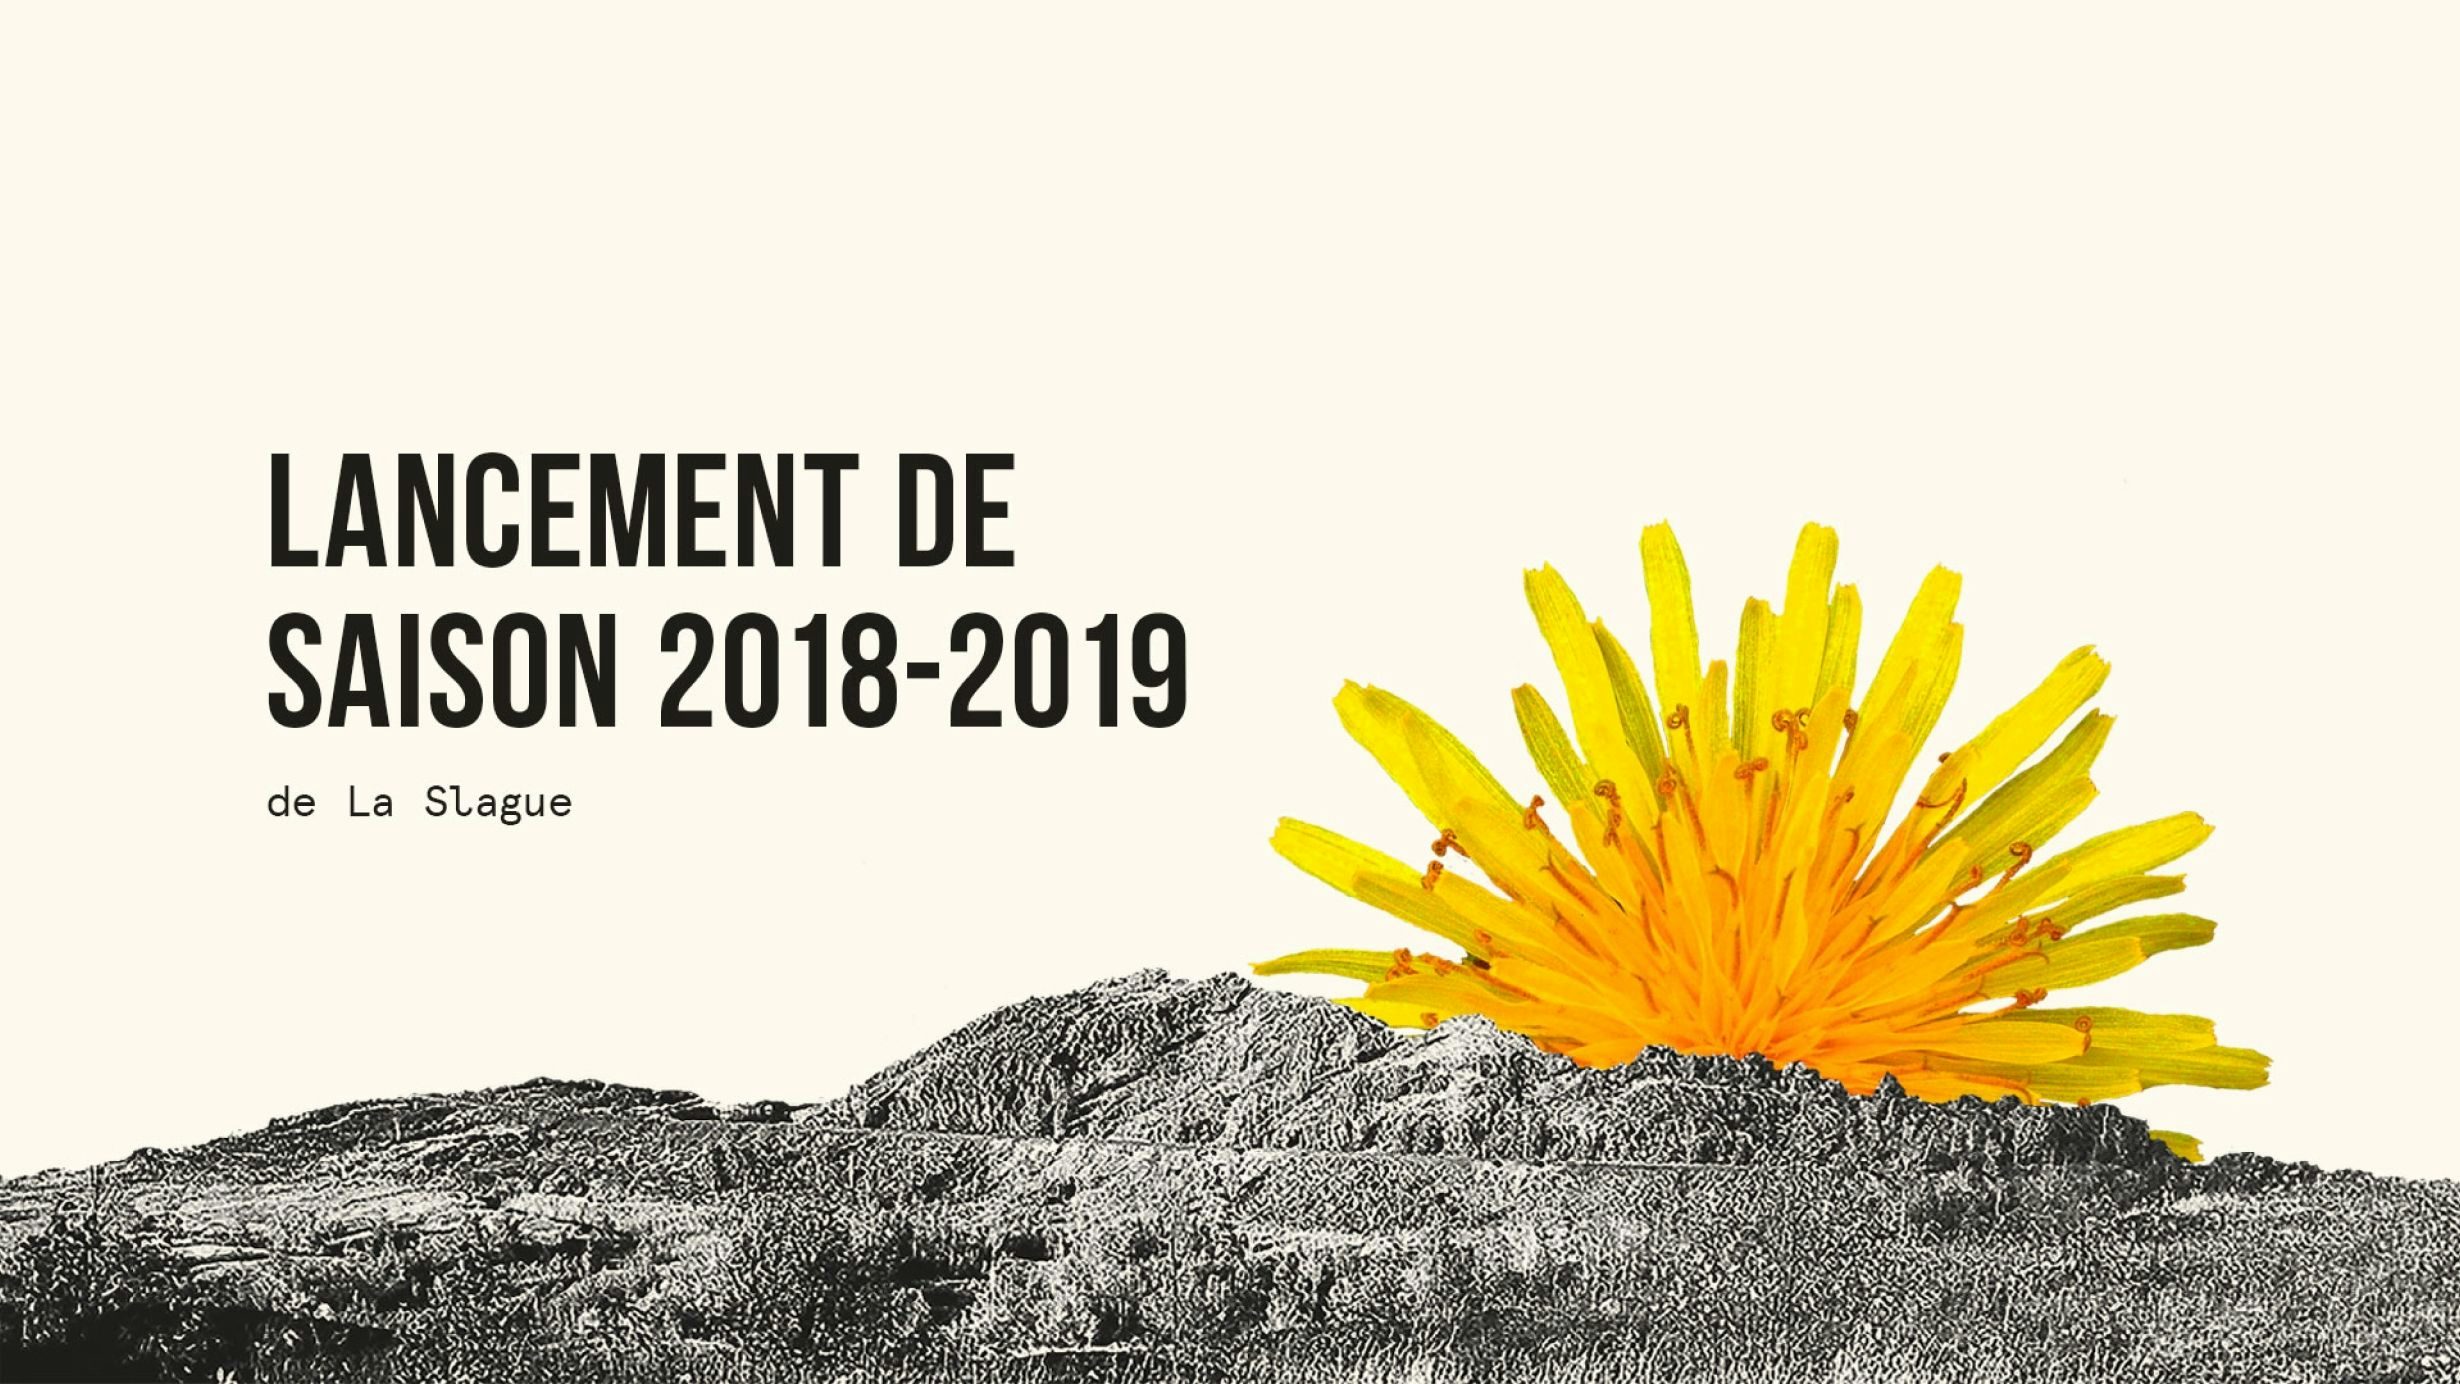 Branded launch graphic for La Slague 2018-2019 season